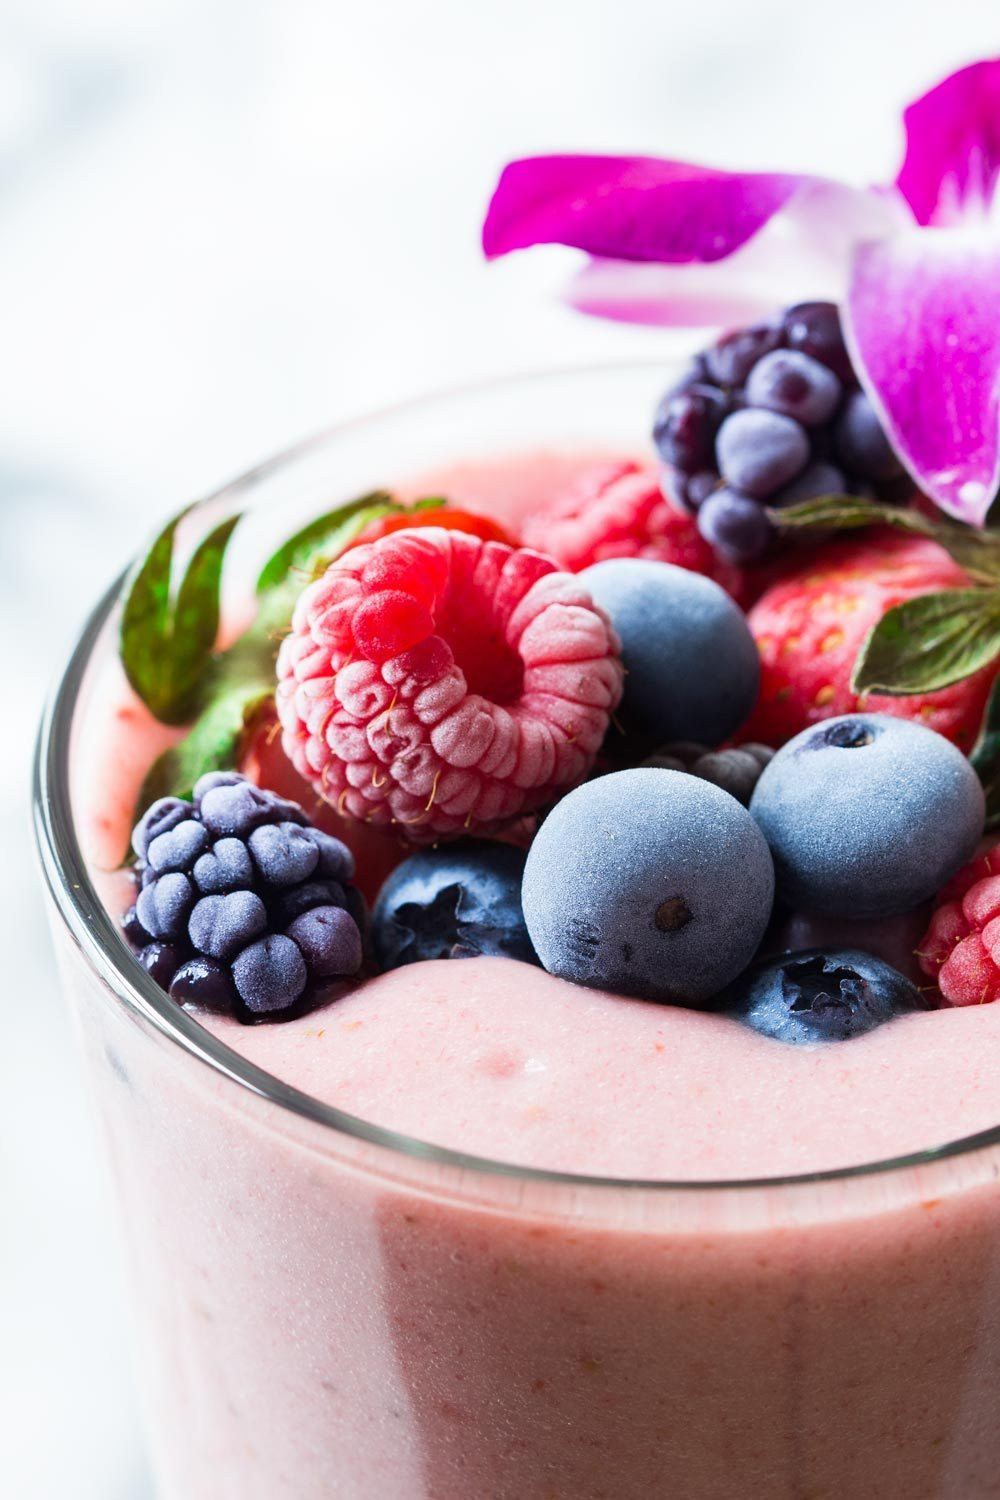 Healthy Smoothie Recipes Without Yogurt
 banana oatmeal smoothie without yogurt